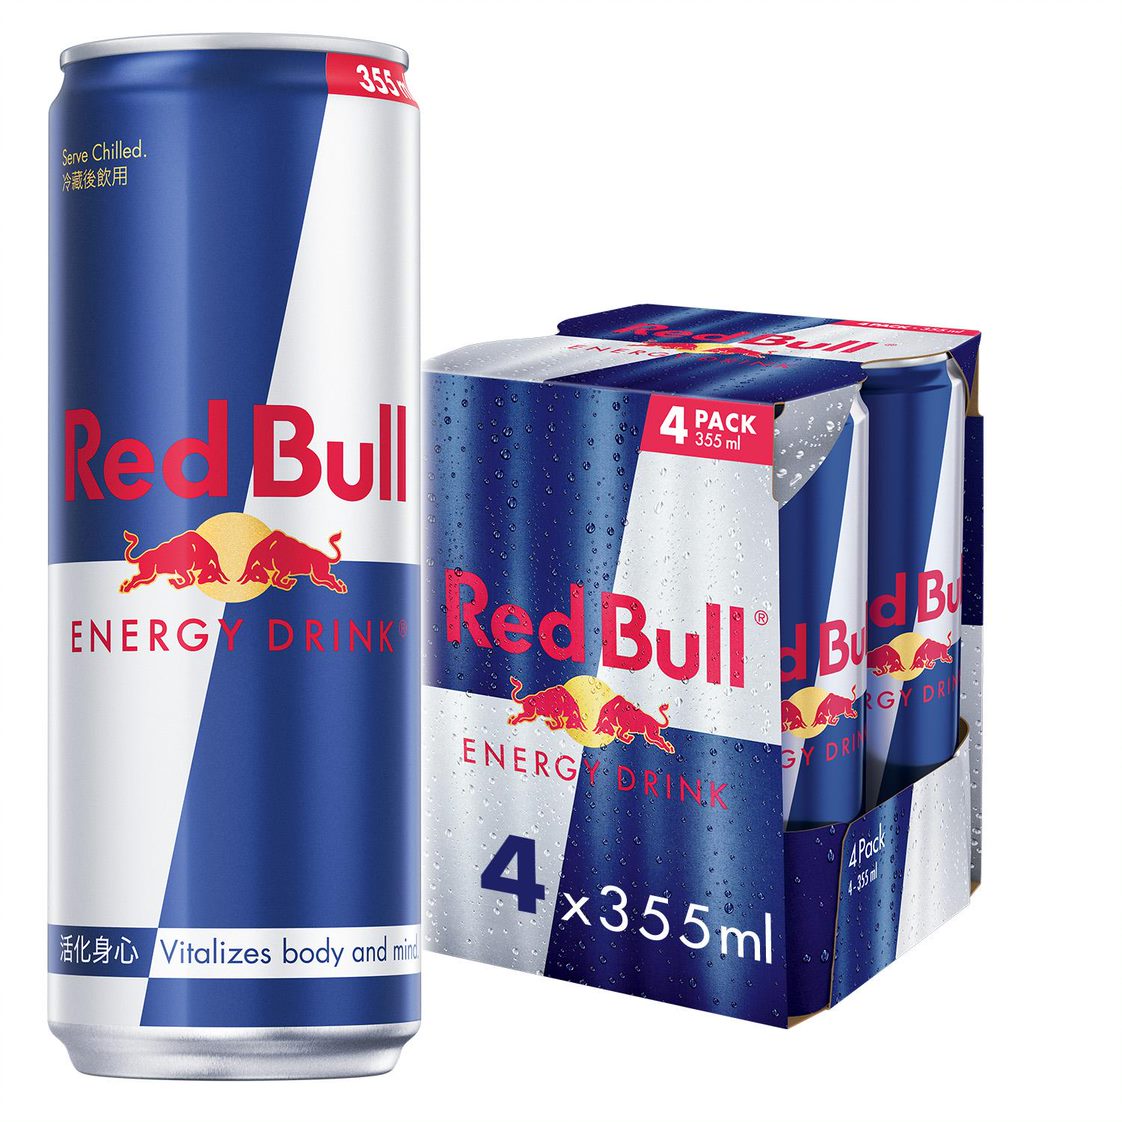 Red Bull Energy Drink 355mlx4, , large